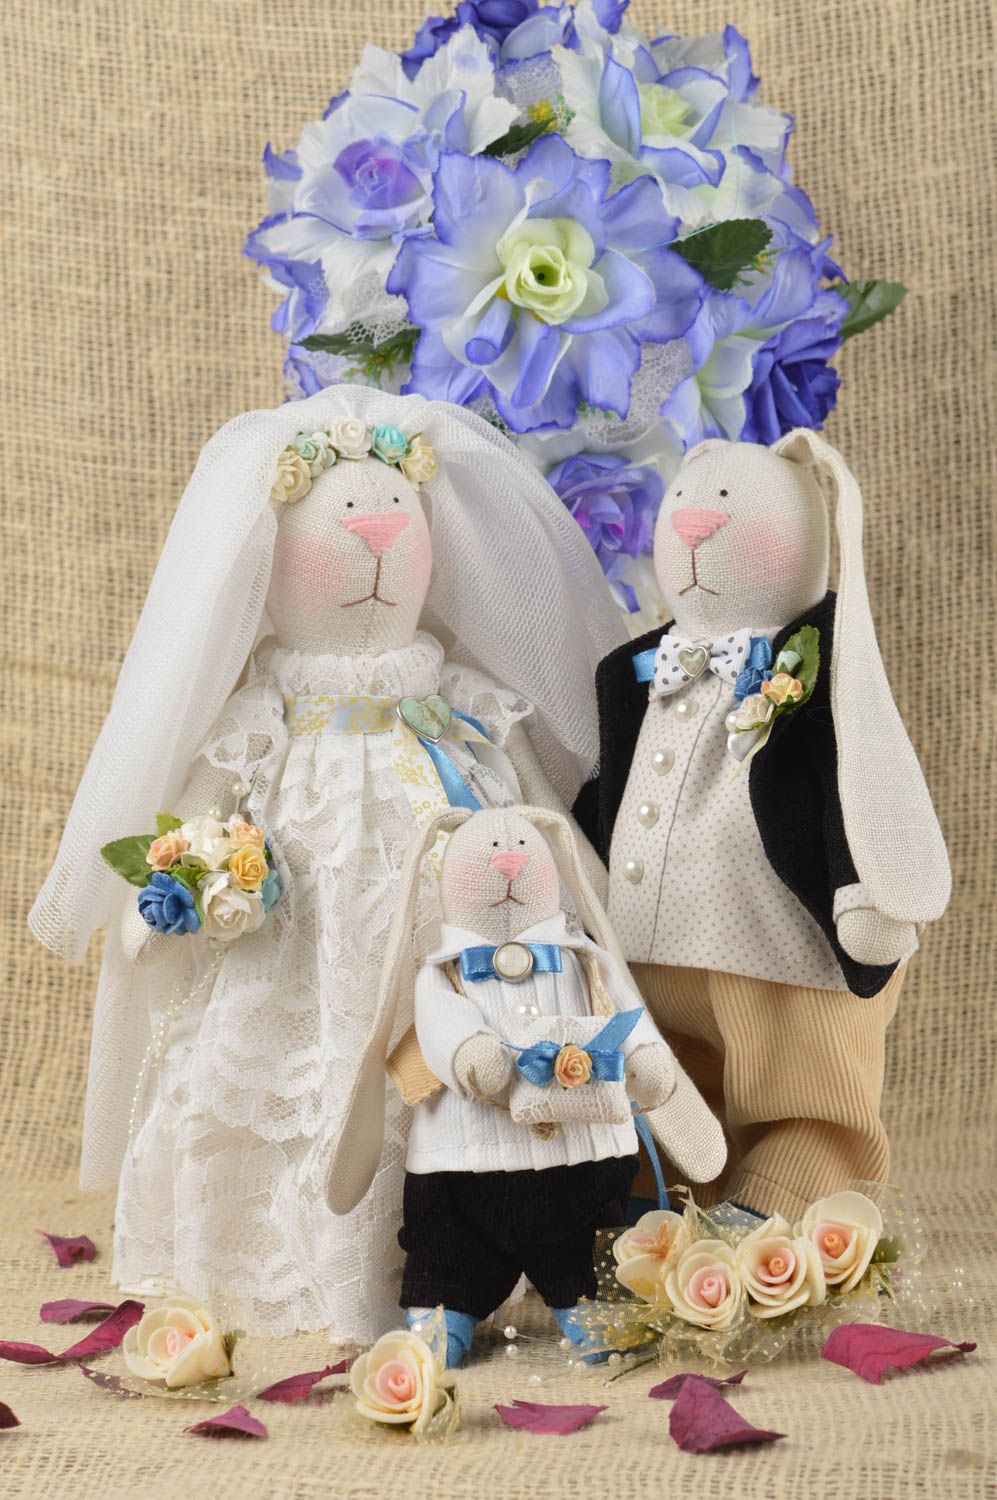 Handmade soft toys unusual textile rabbits beautiful wedding decor ideas photo 1